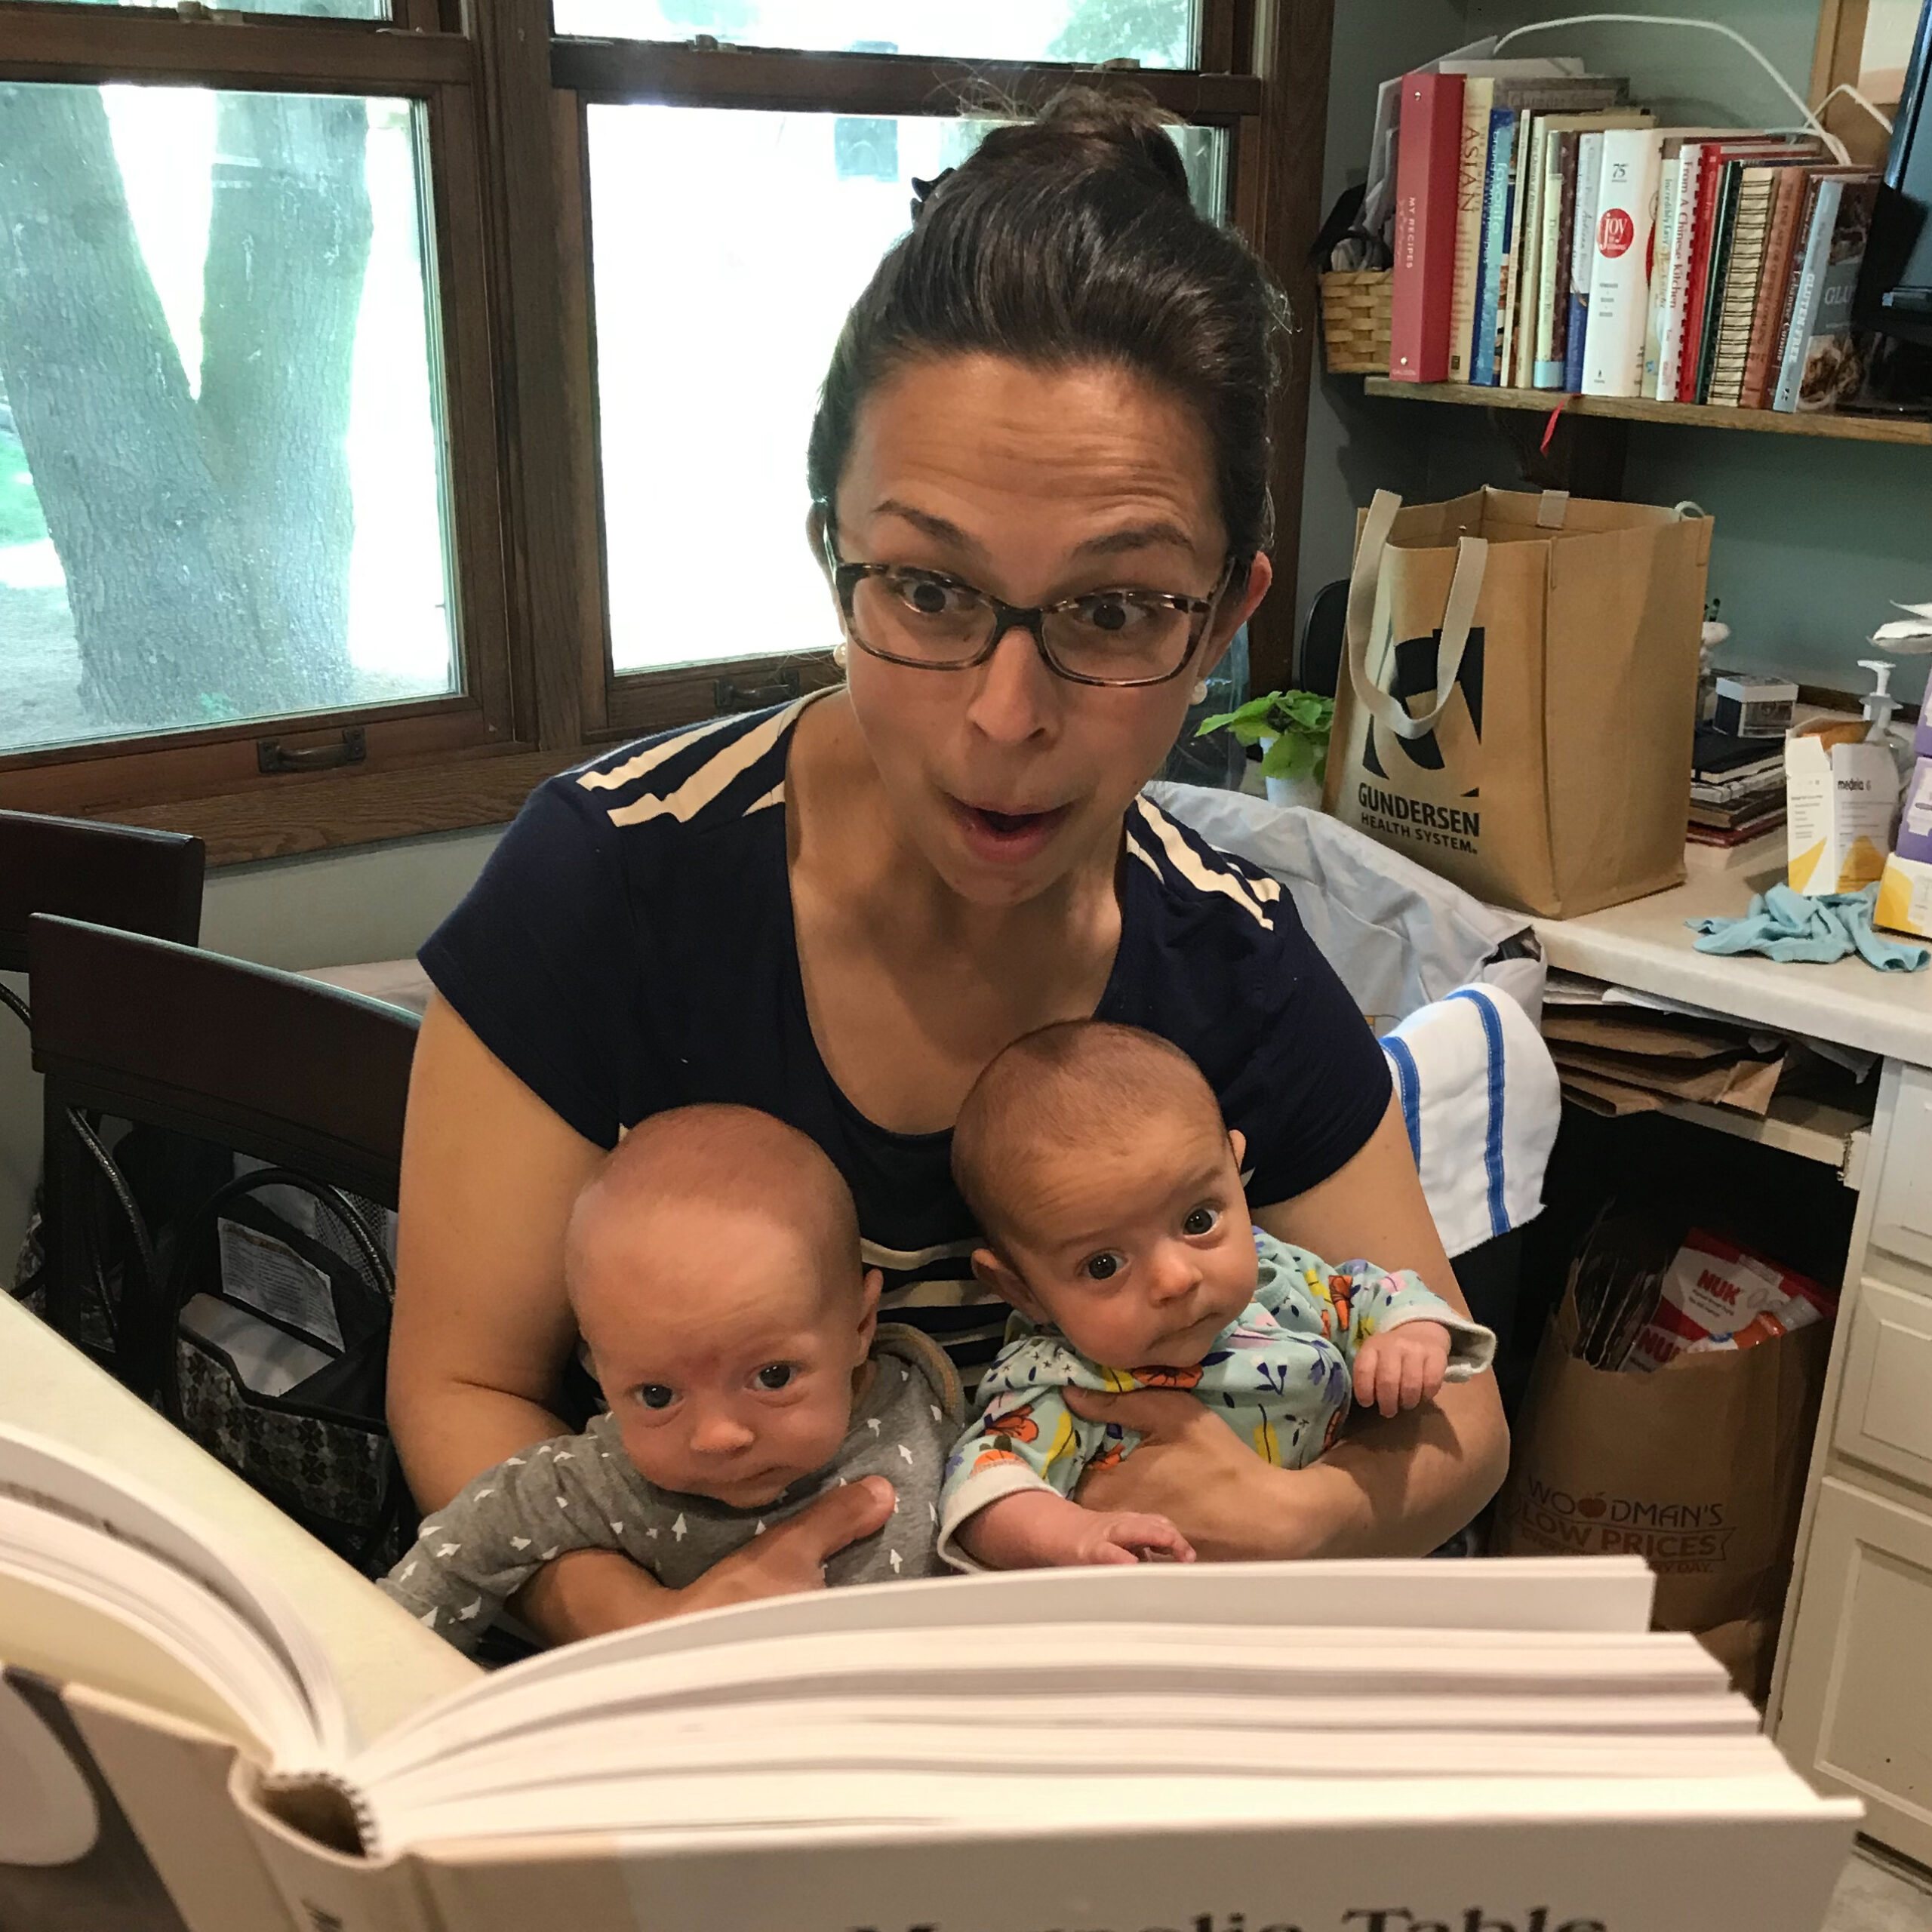 Jaimi Swenson and her twin babies